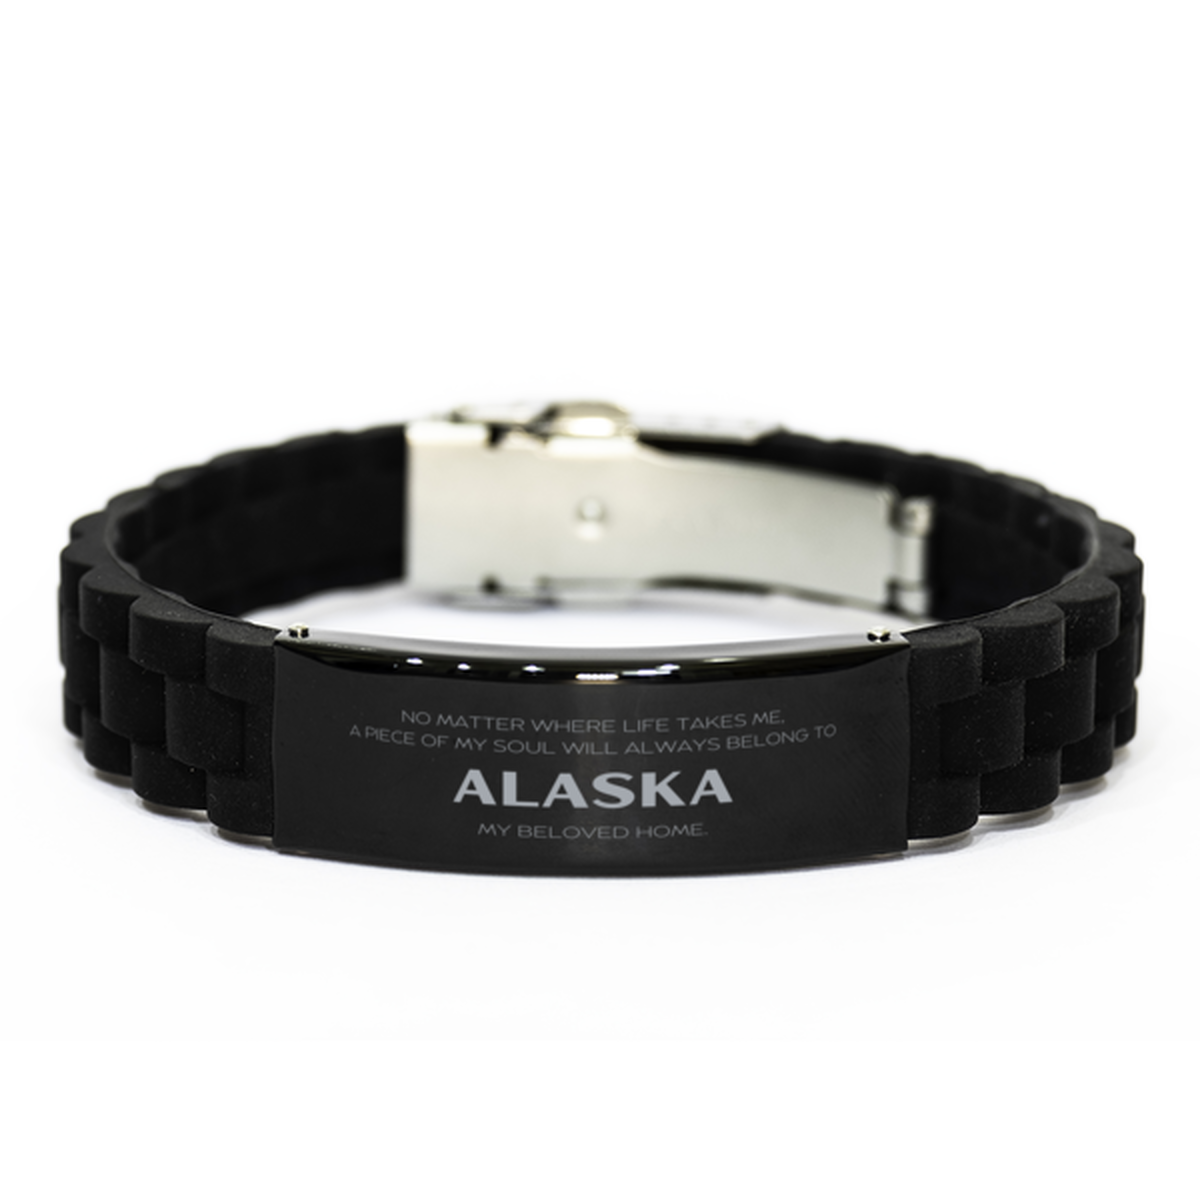 Love Alaska State Gifts, My soul will always belong to Alaska, Proud Black Glidelock Clasp Bracelet, Birthday Unique Gifts For Alaska Men, Women, Friends